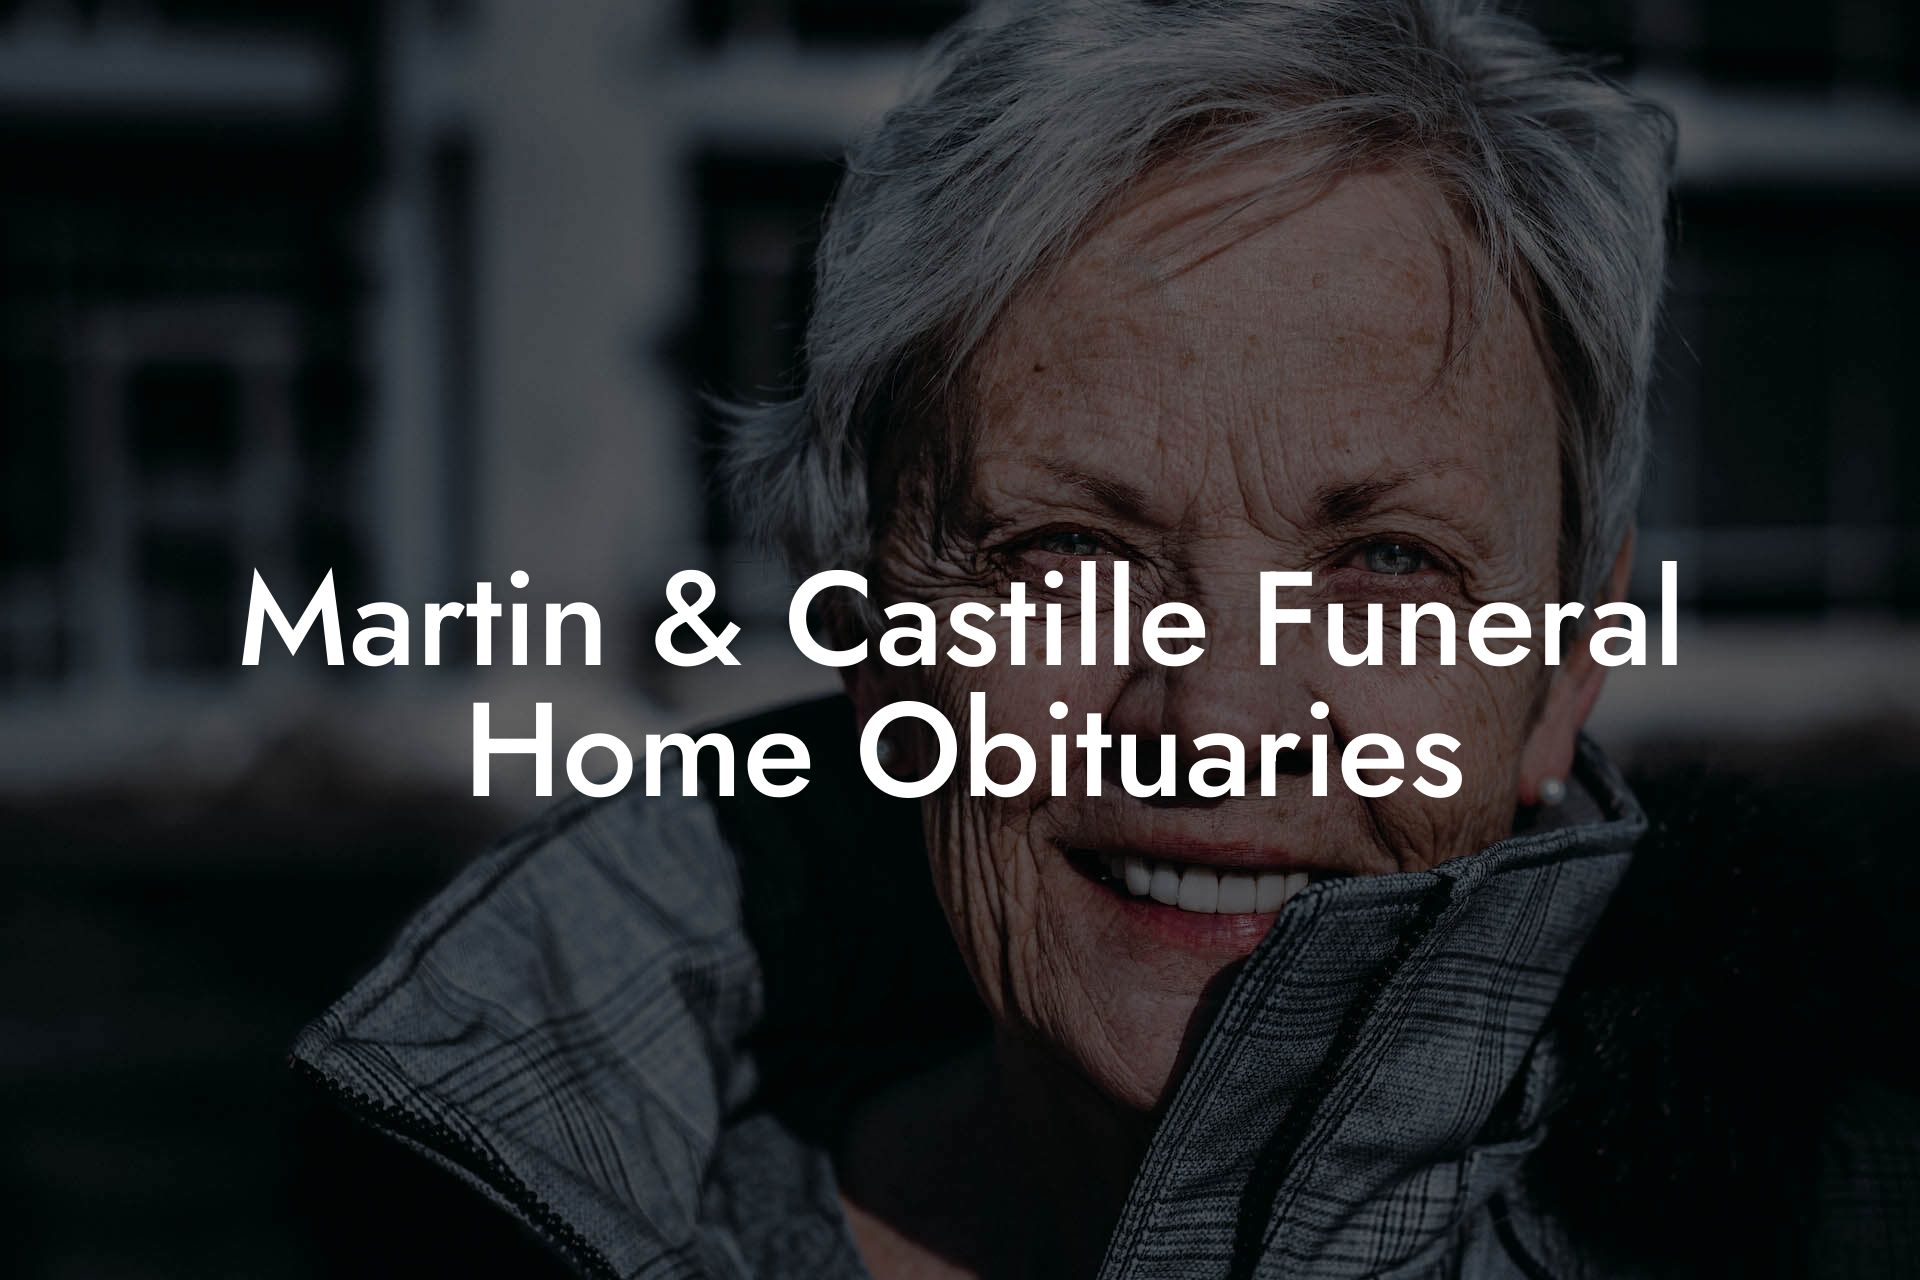 Martin & Castille Funeral Home Obituaries